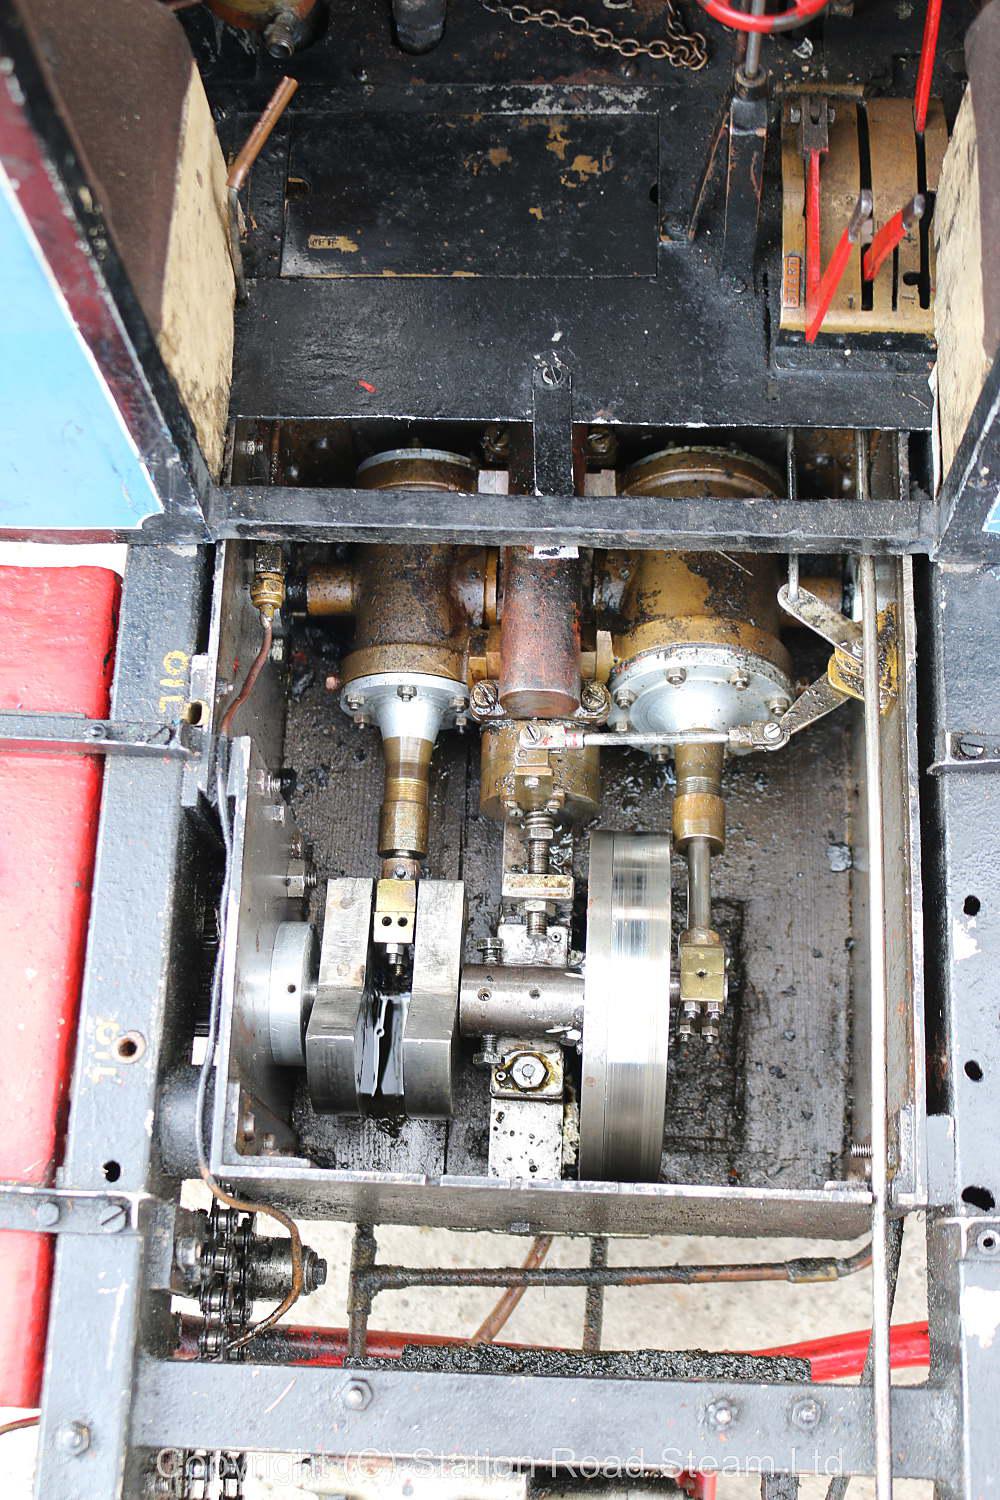 3 inch scale Yorkshire steam wagon